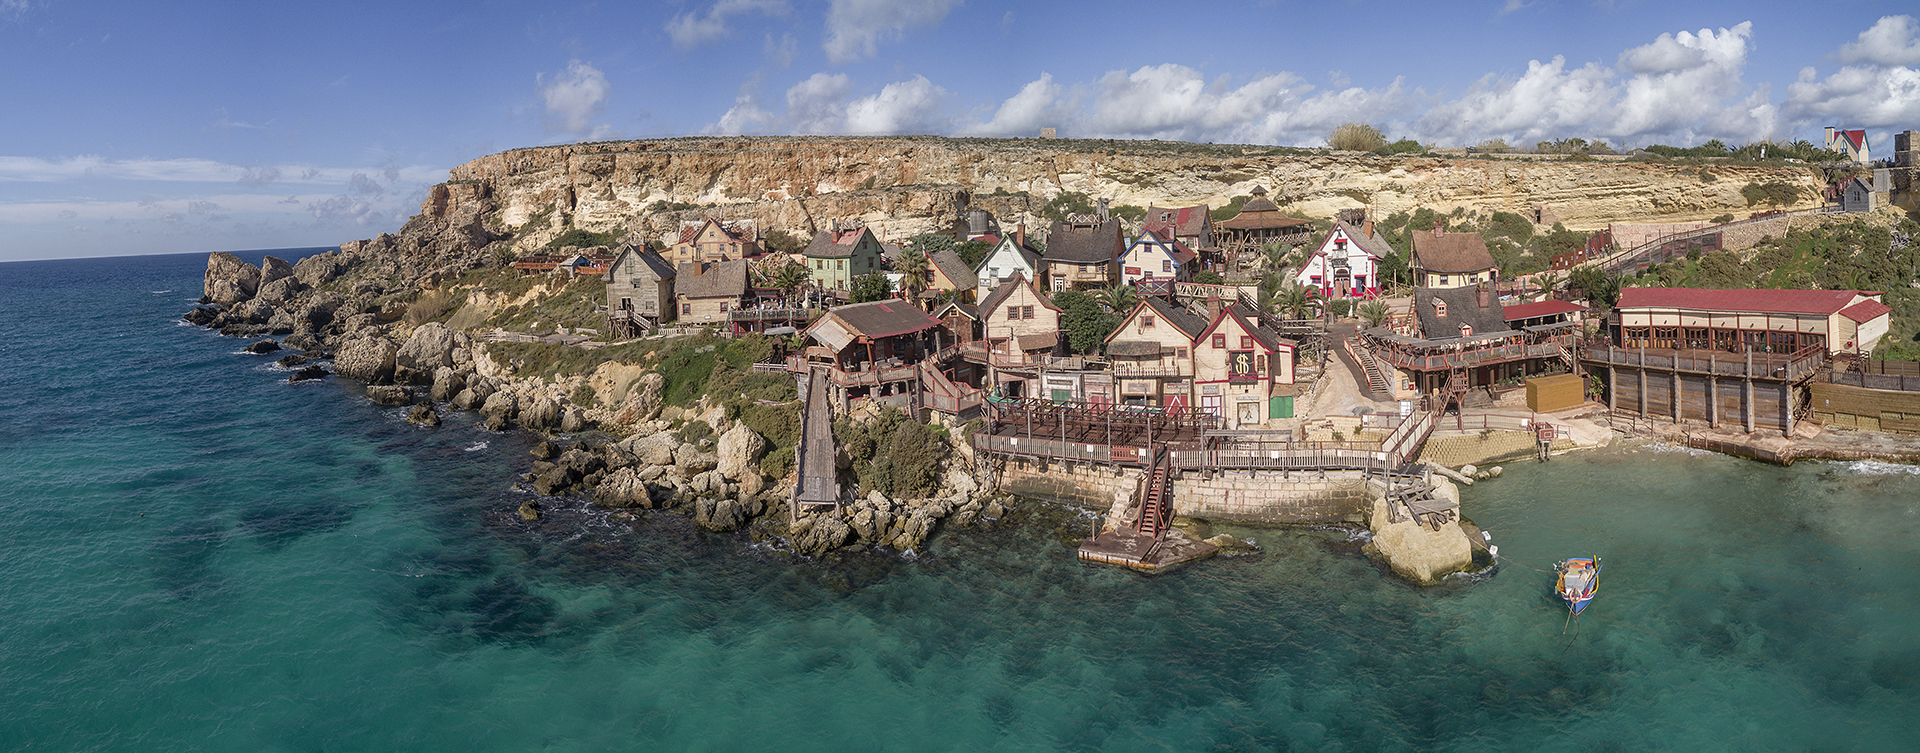 Popeye village movie set, Malta from a drone